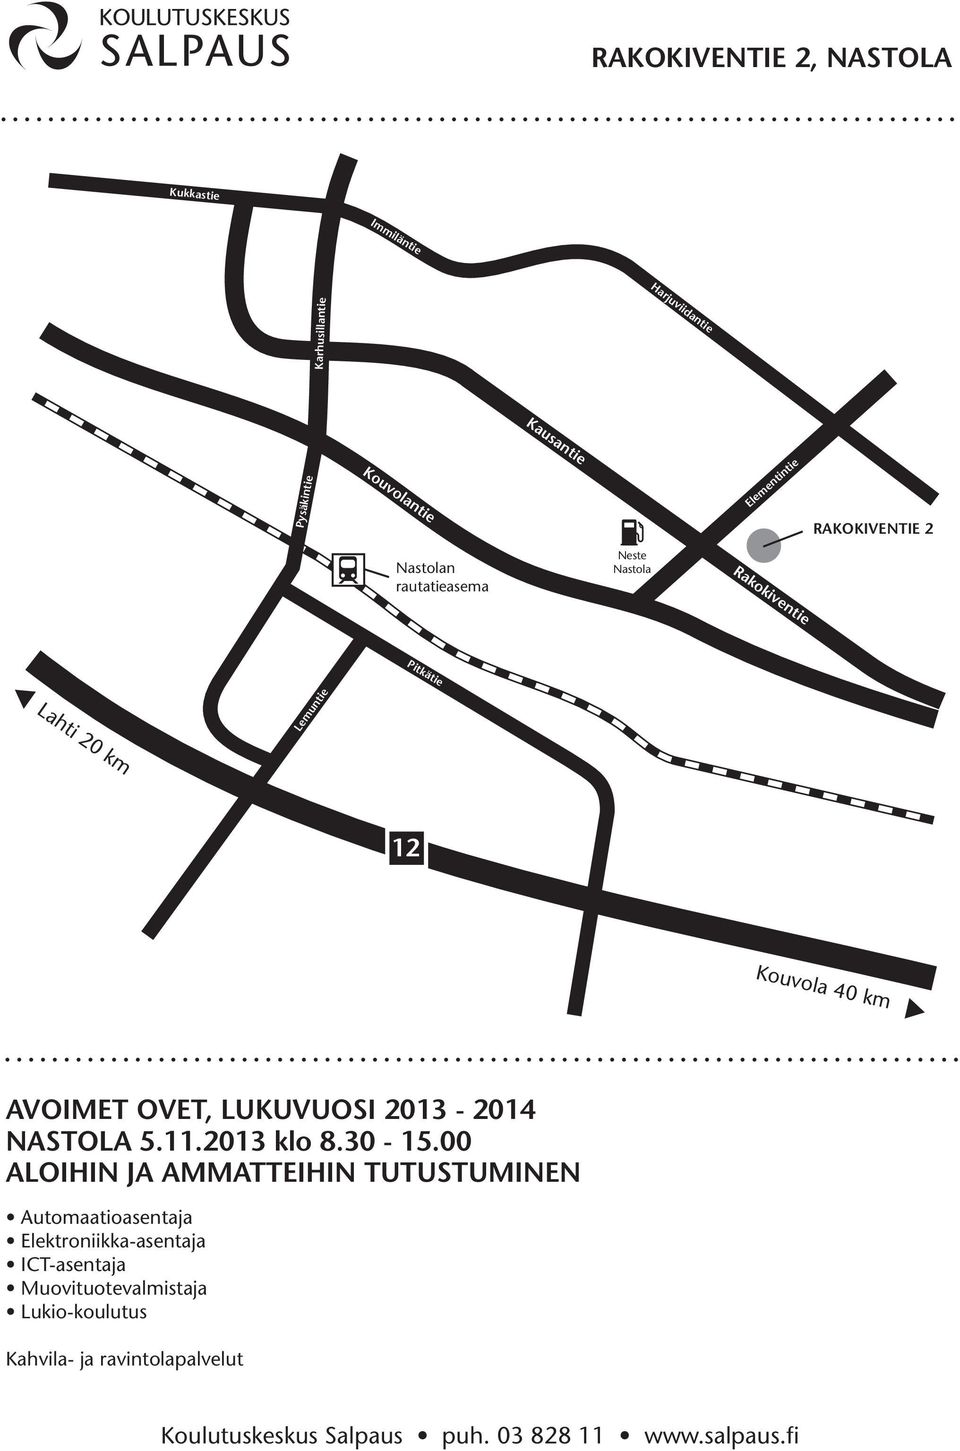 Nastola Lahti 20 km Lemuntie 12 Kouvola 40 km NASTOLA 5.11.2013 klo 8.30-15.